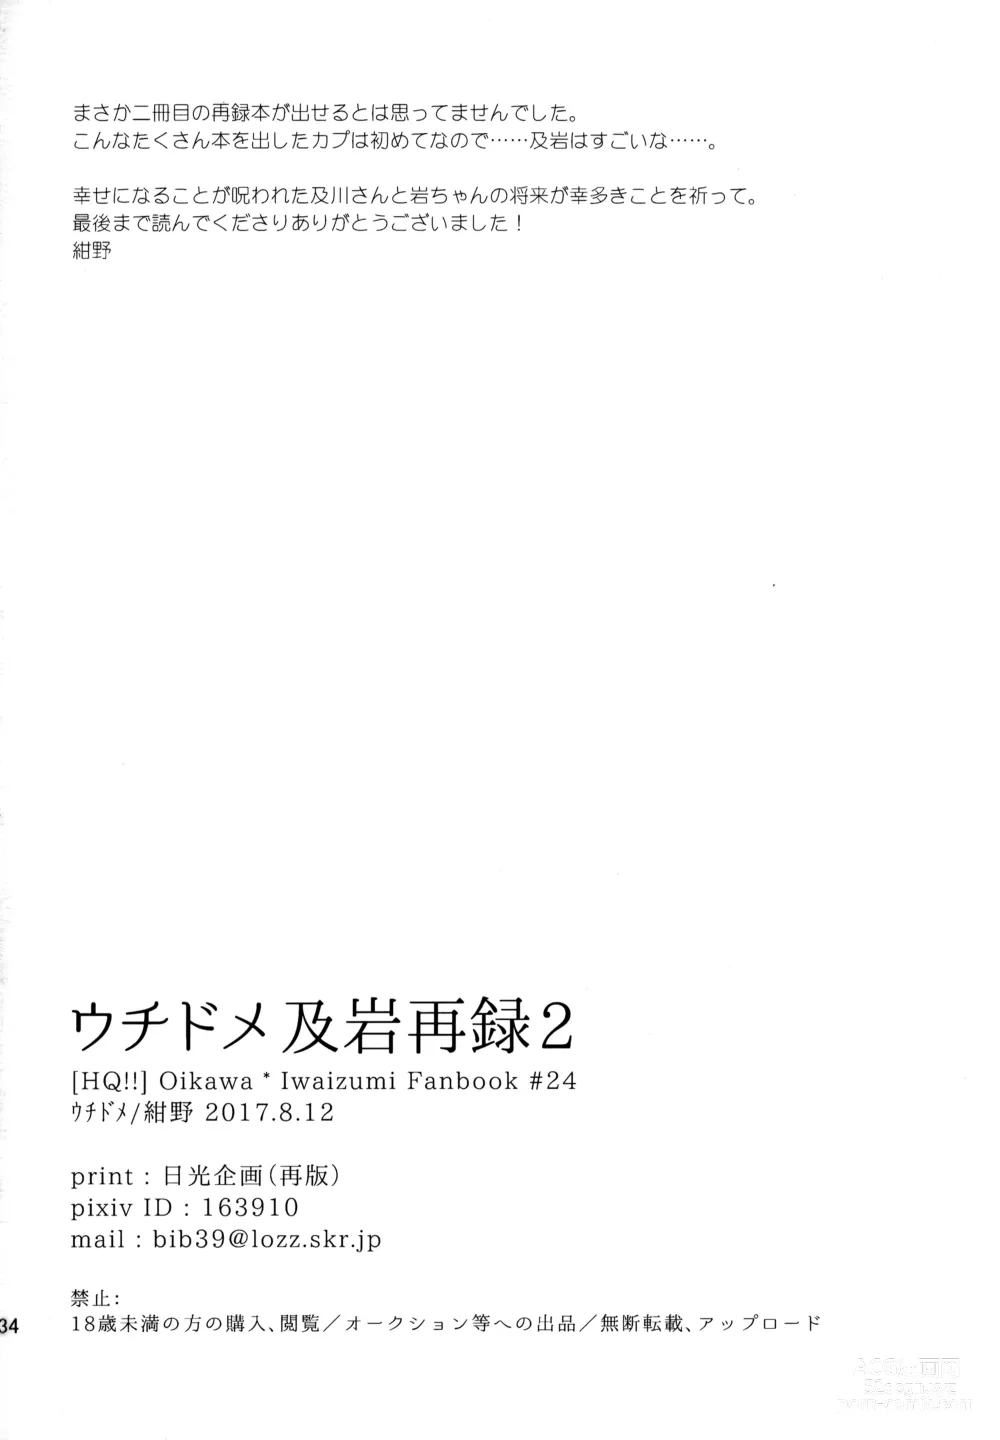 Page 233 of doujinshi Uchidome OiIwa Sairoku 2